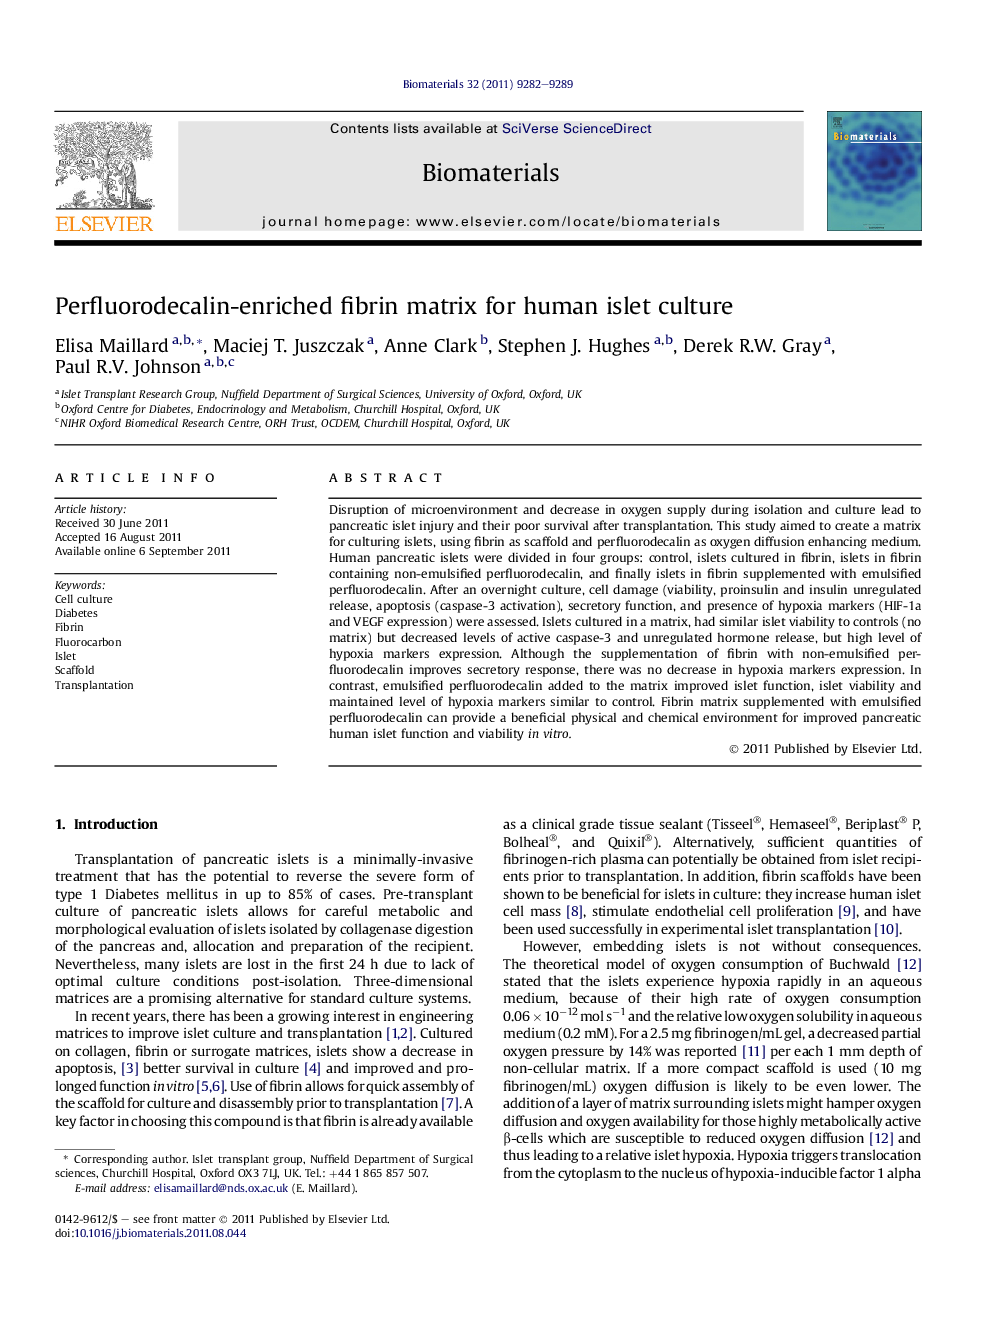 Perfluorodecalin-enriched fibrin matrix for human islet culture